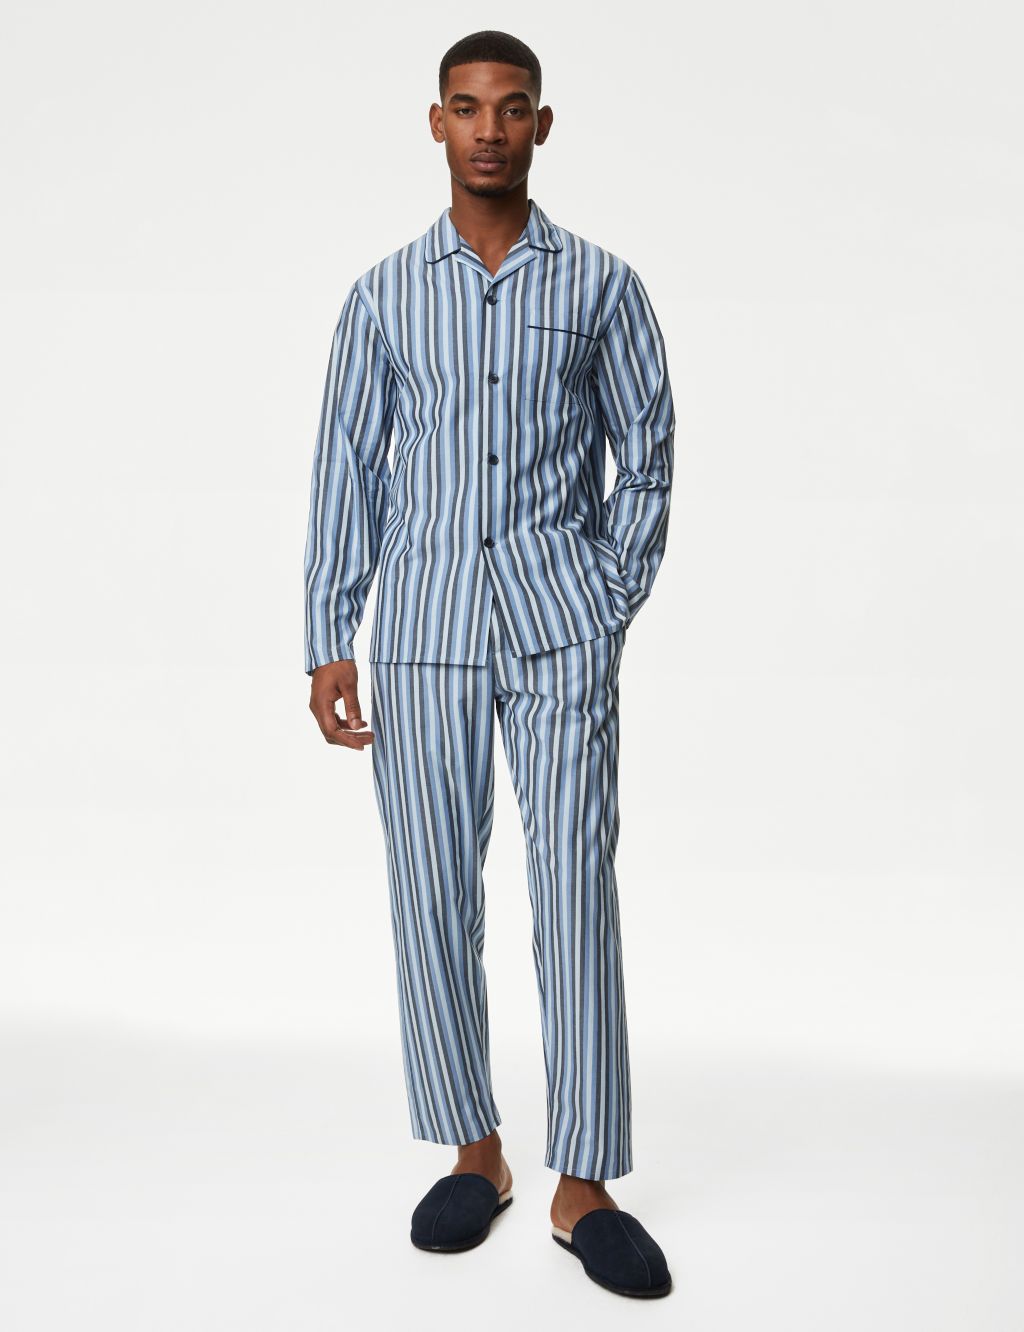 Men's Pyjama Sets